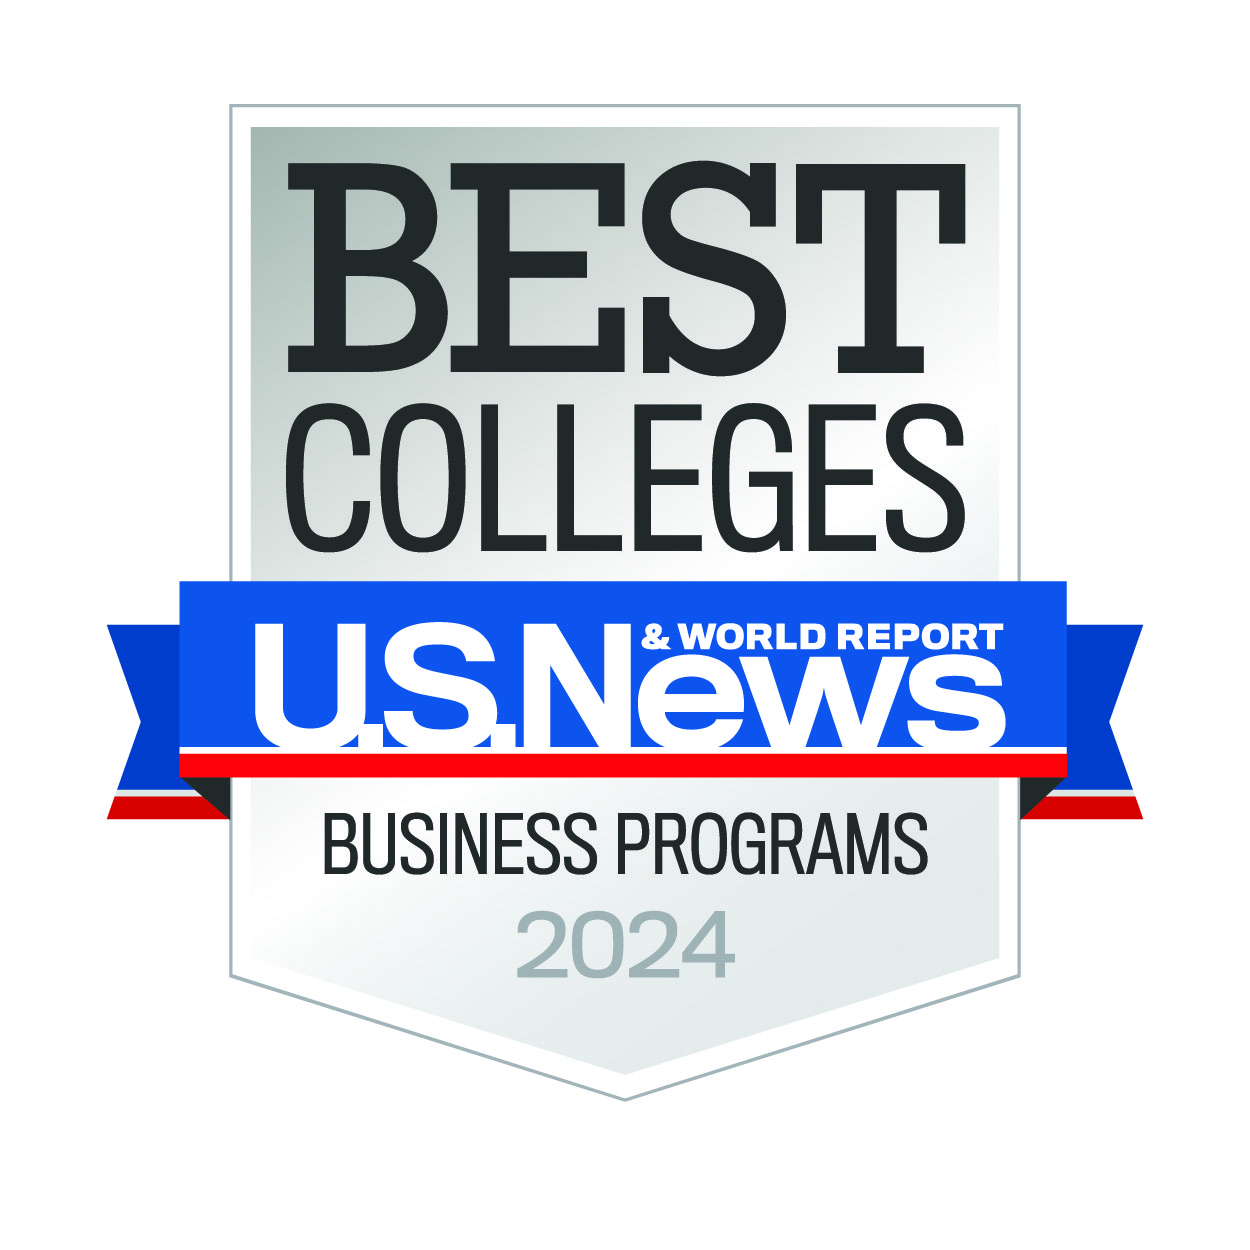 US News and World Report Best Undergraduate Business Programs, 2022-2023 logo